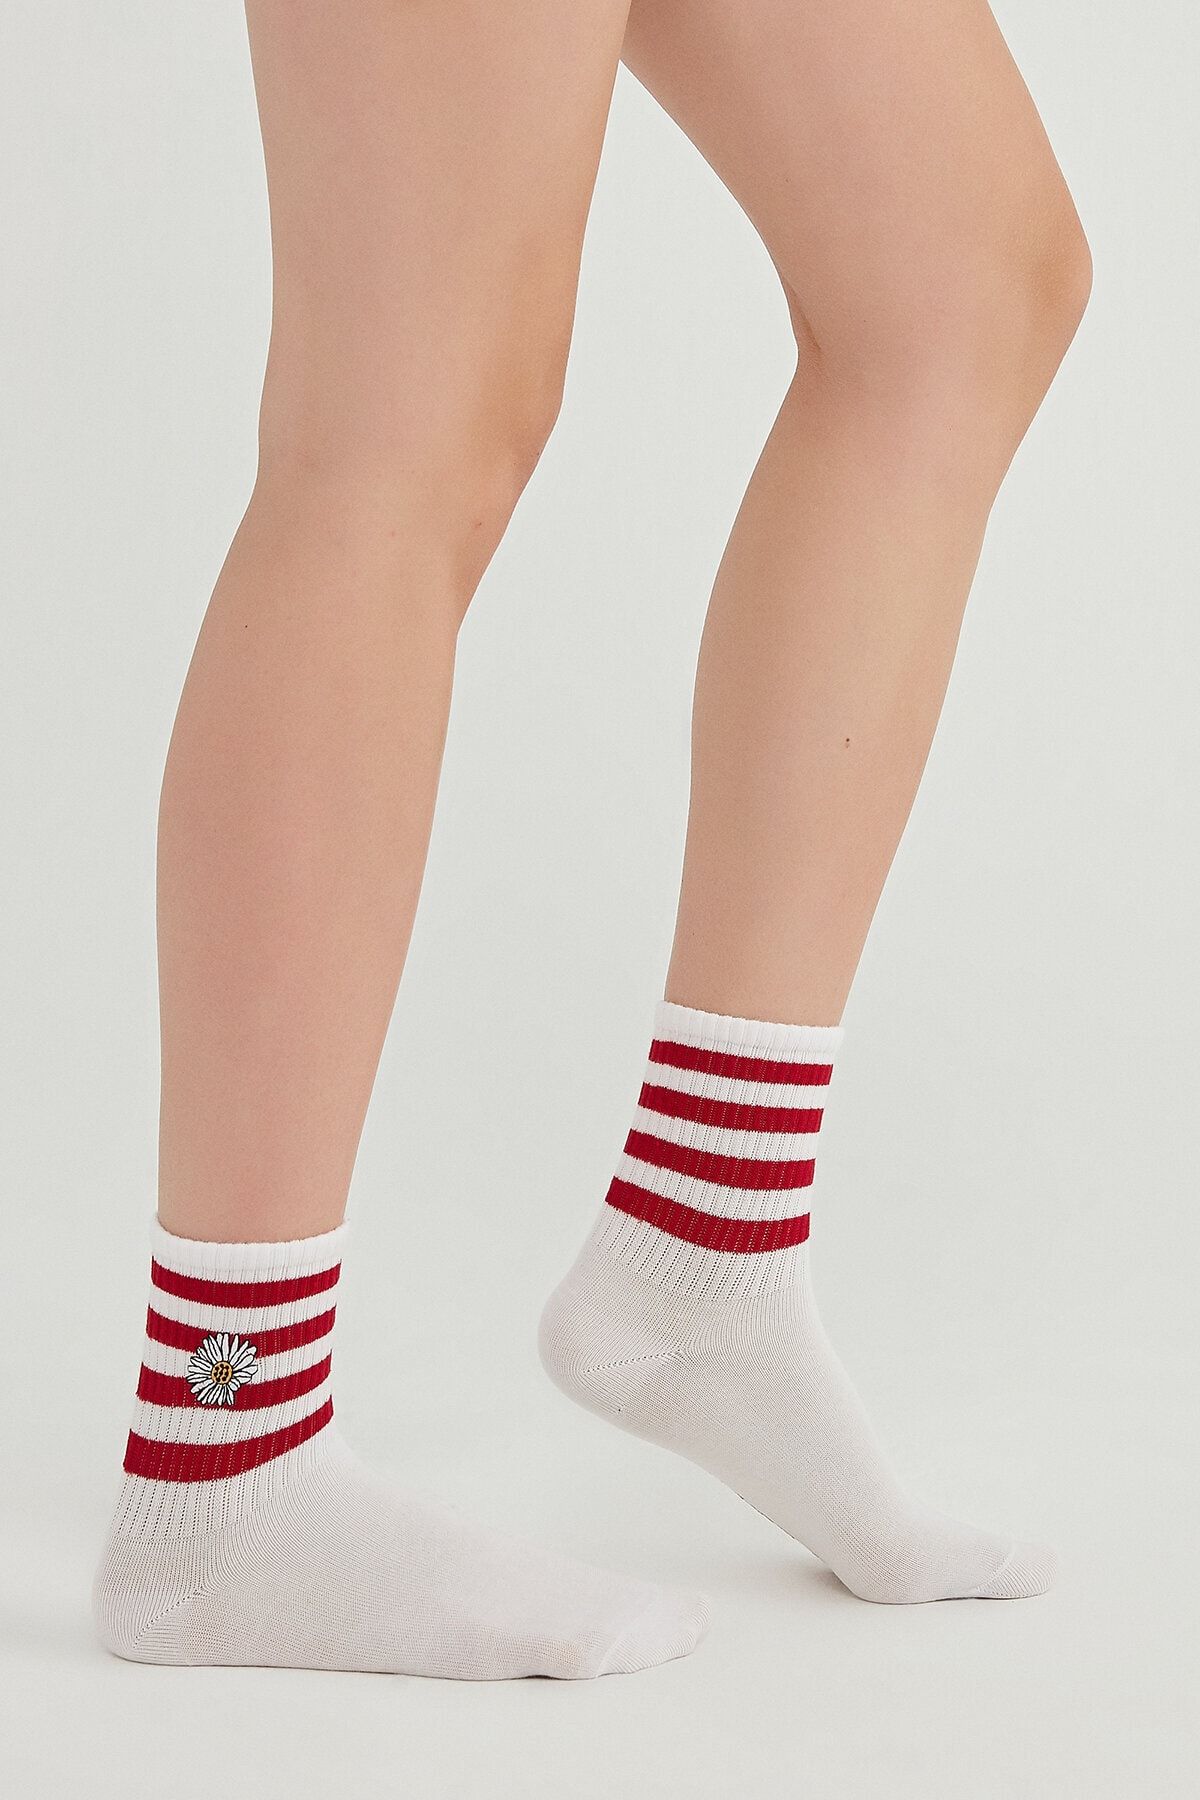 Penti Beyaz Cool Awesome Daisy Soket Çorap